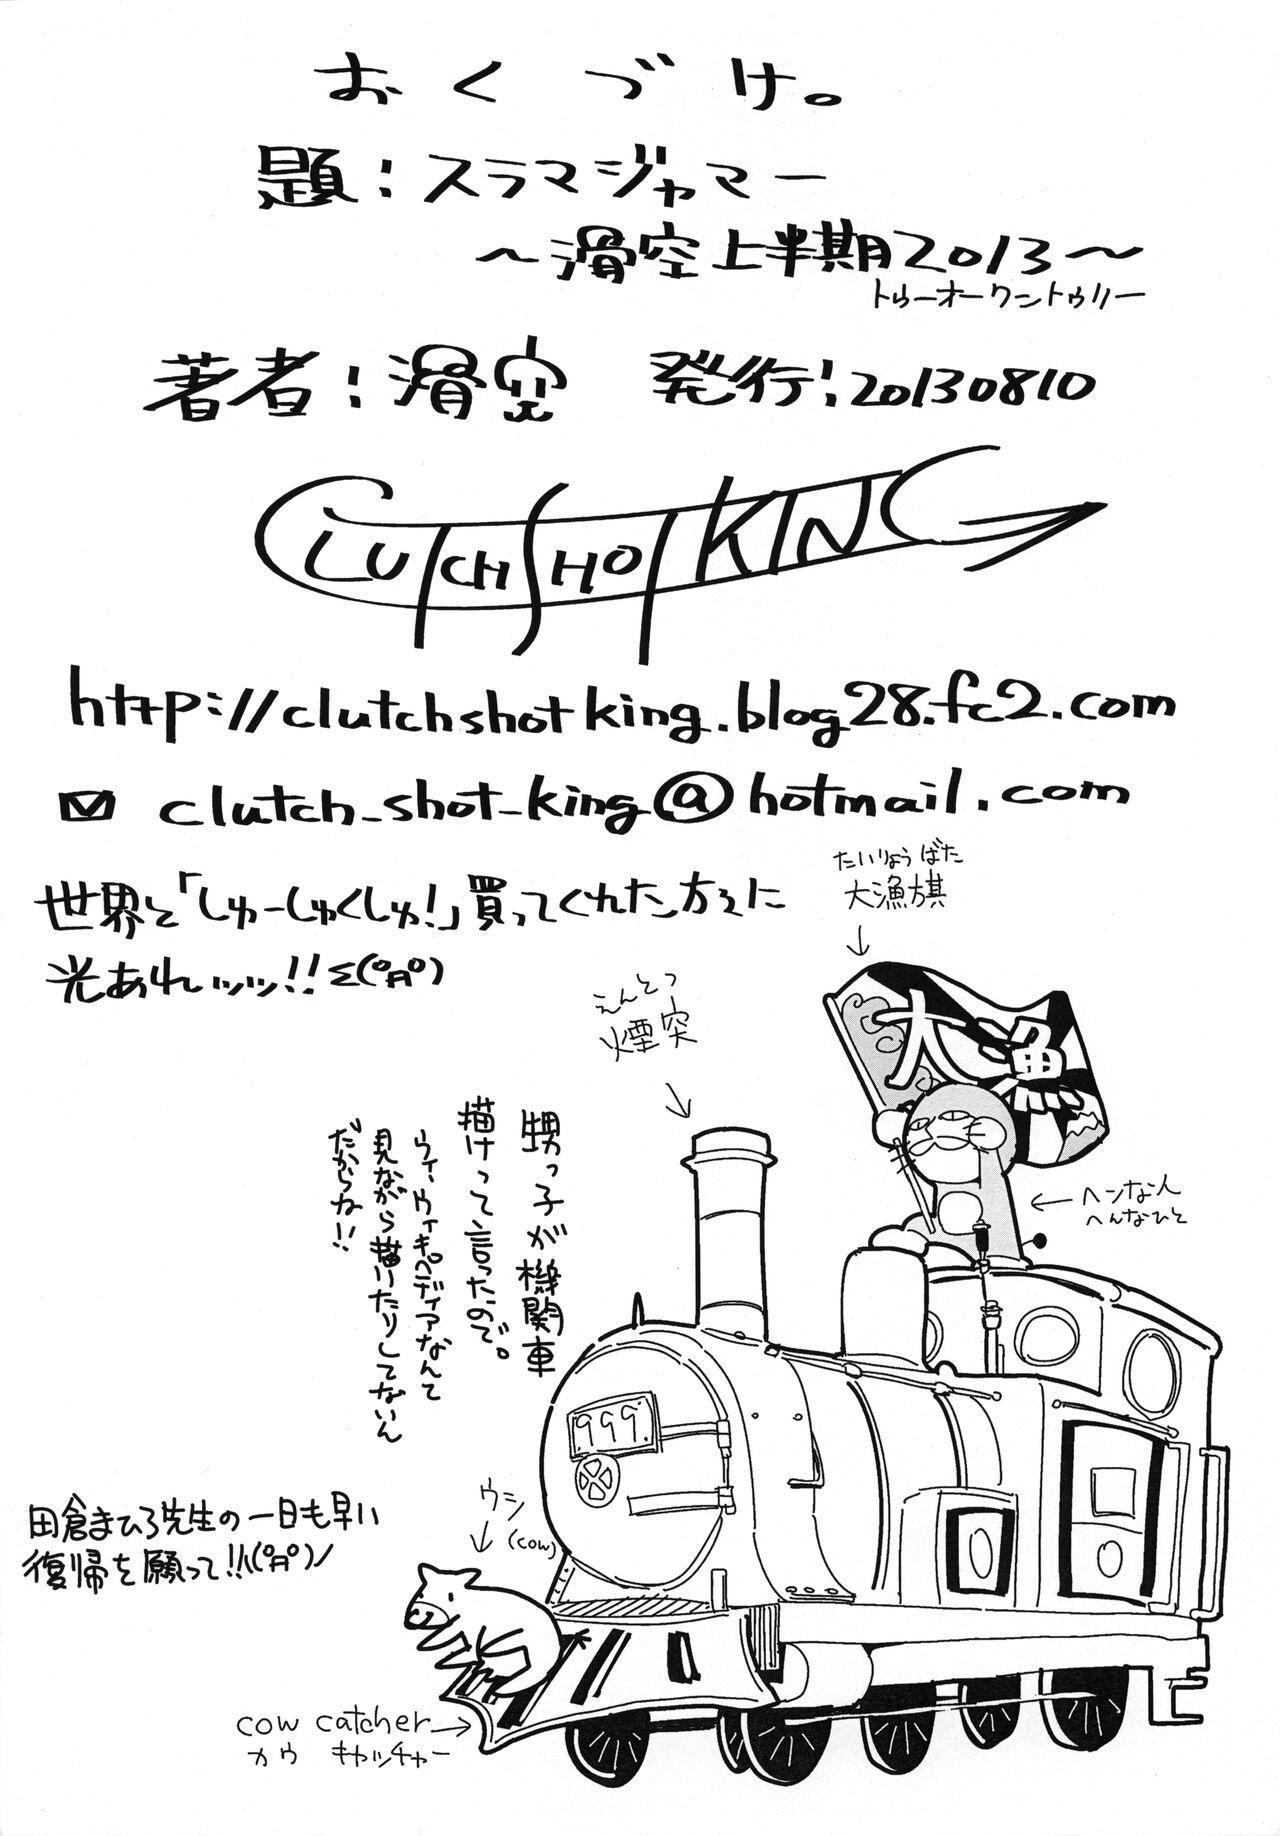 Face Fucking Slammer Jammer Kakkuu Kamihanki 2013 - Dokidoki precure Tamako market Wreck it ralph Porra - Page 9